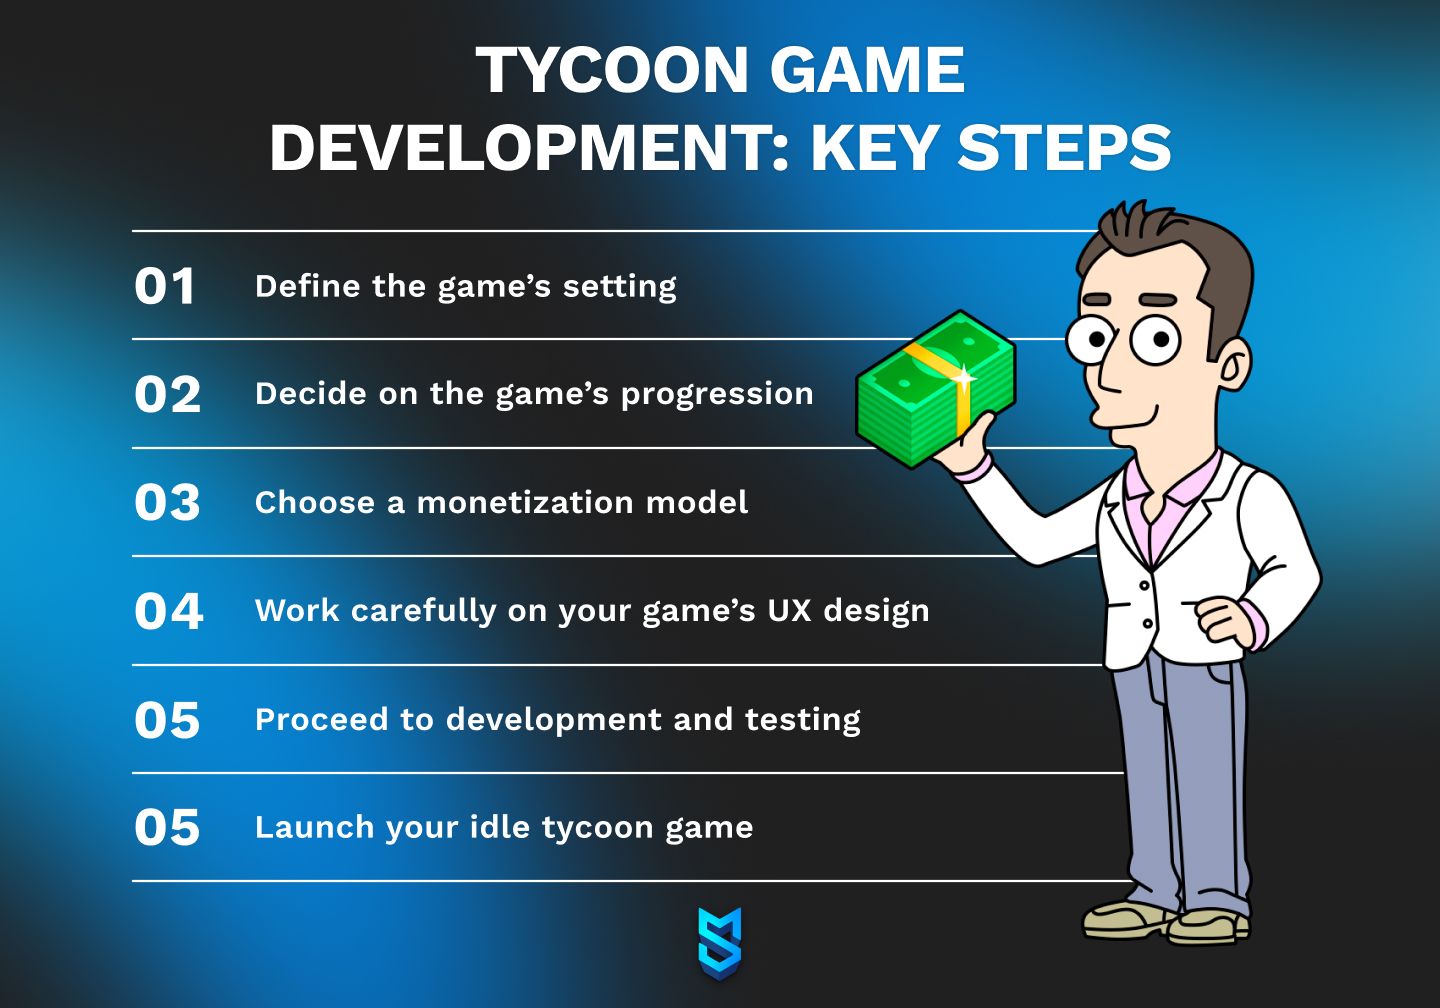 Tycoon game development: Key steps